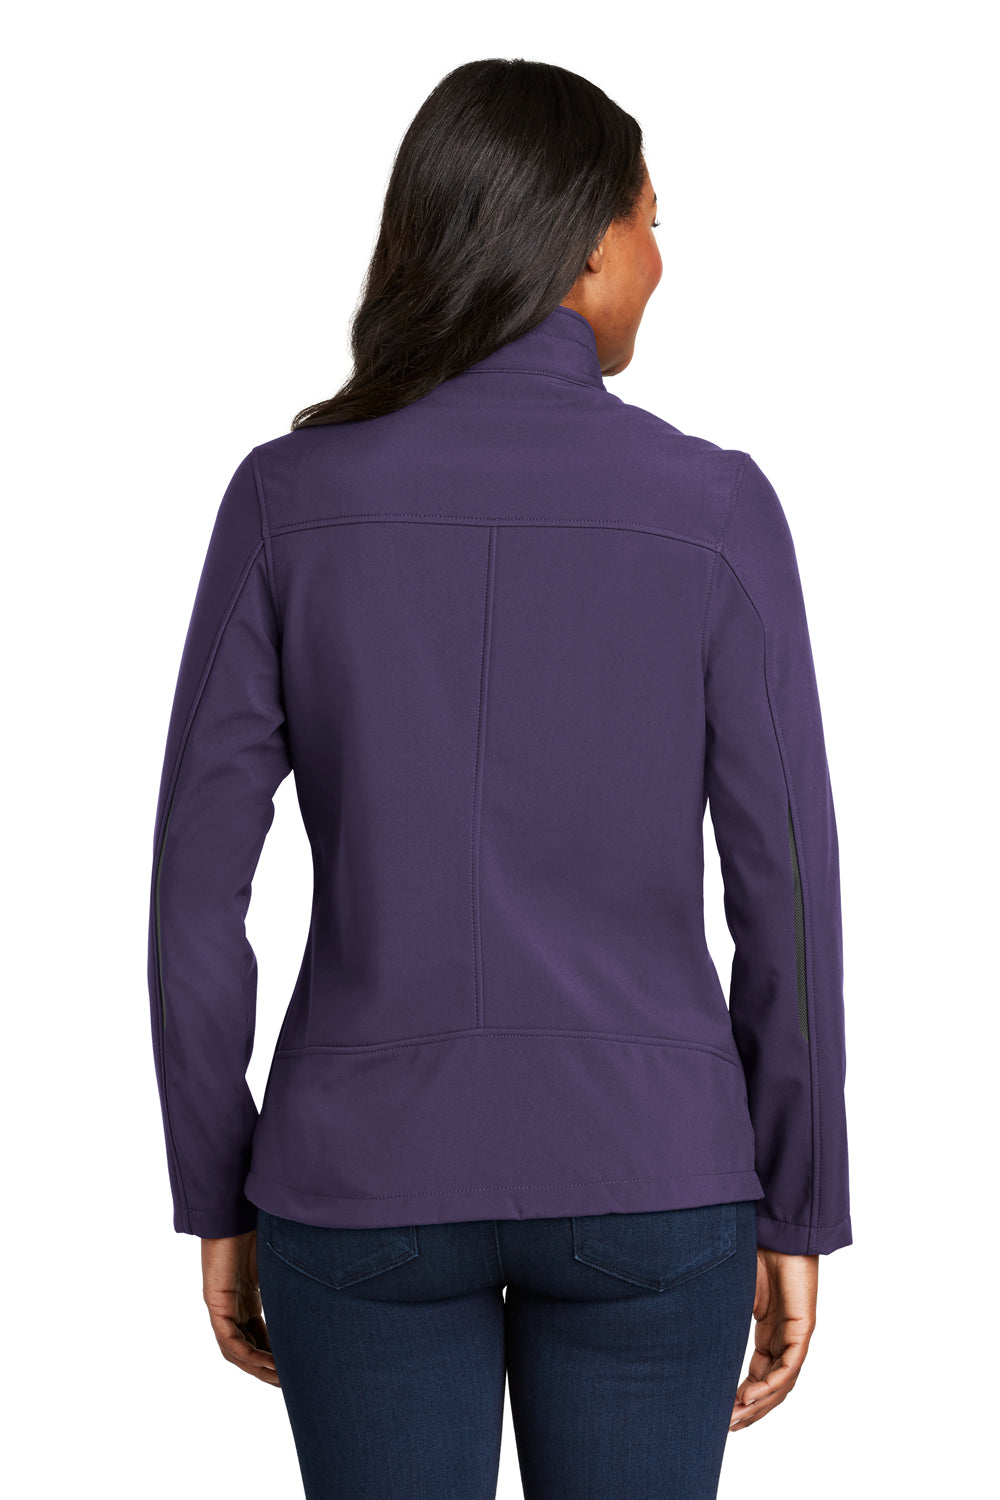 Port Authority L324 Womens Welded Wind & Water Resistant Full Zip Jacket Purple Back